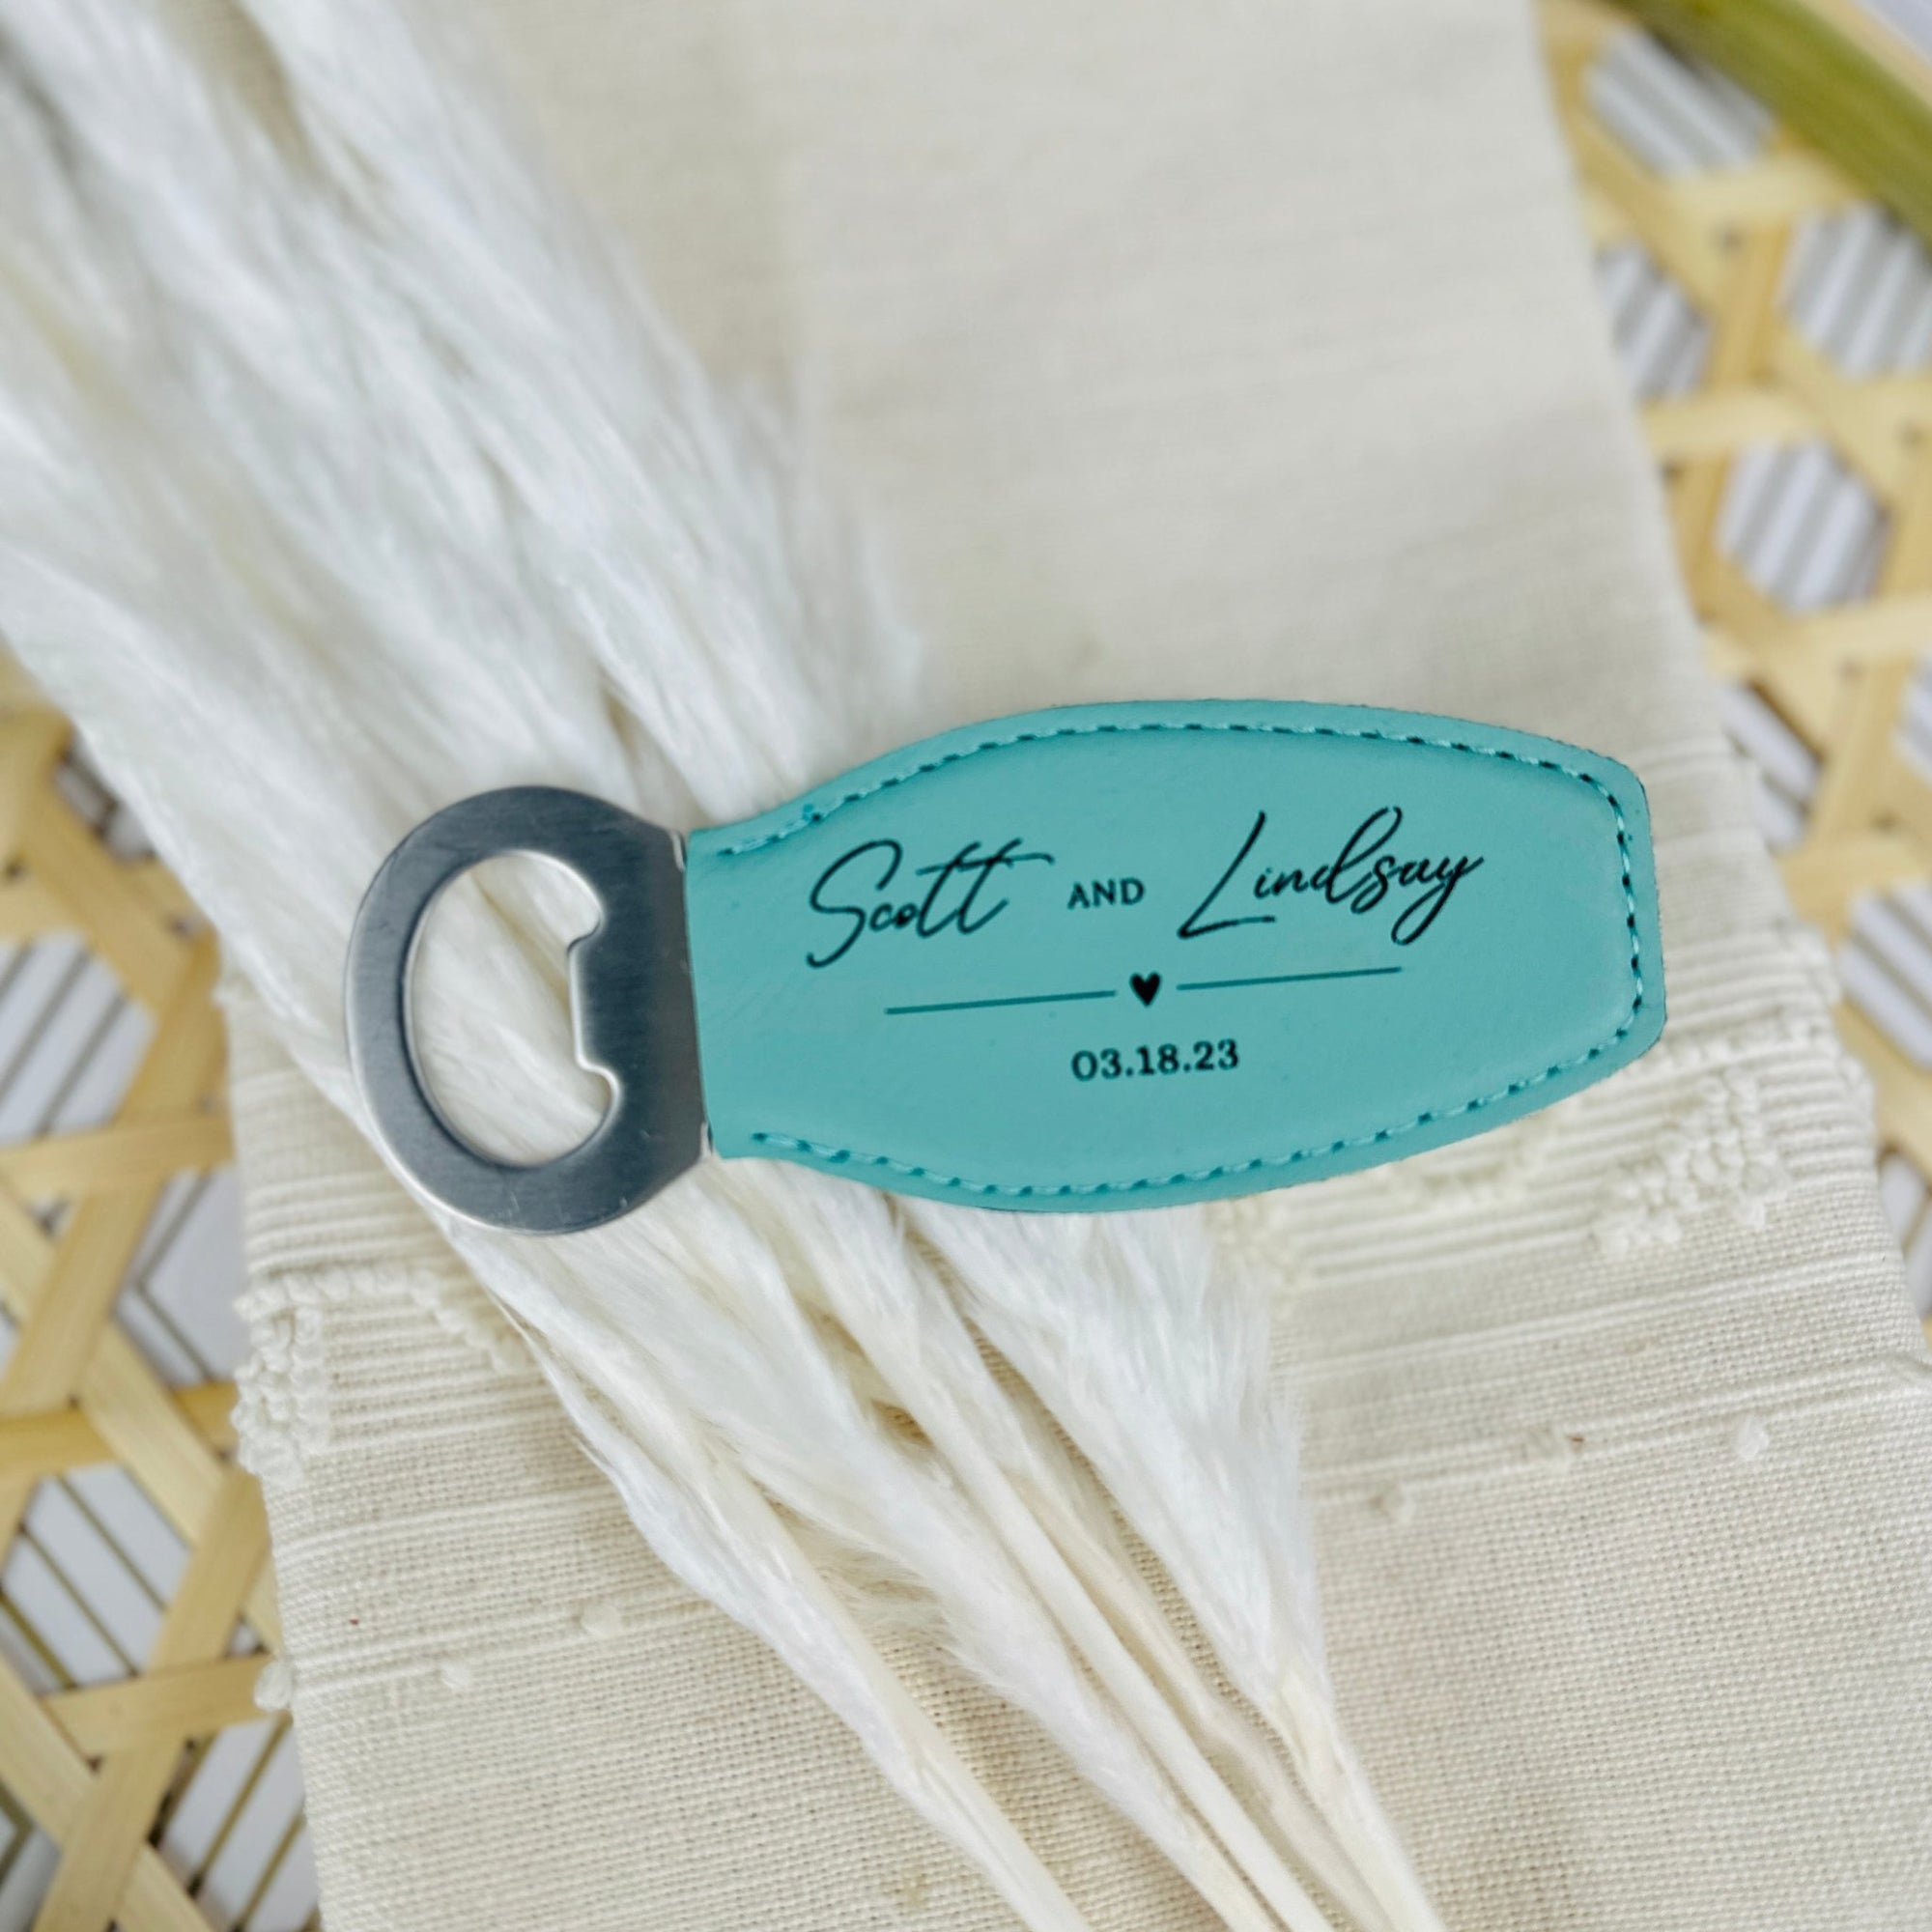 Wrapping paper  Louis vuitton, Lv fashion, Tiffany's bridal